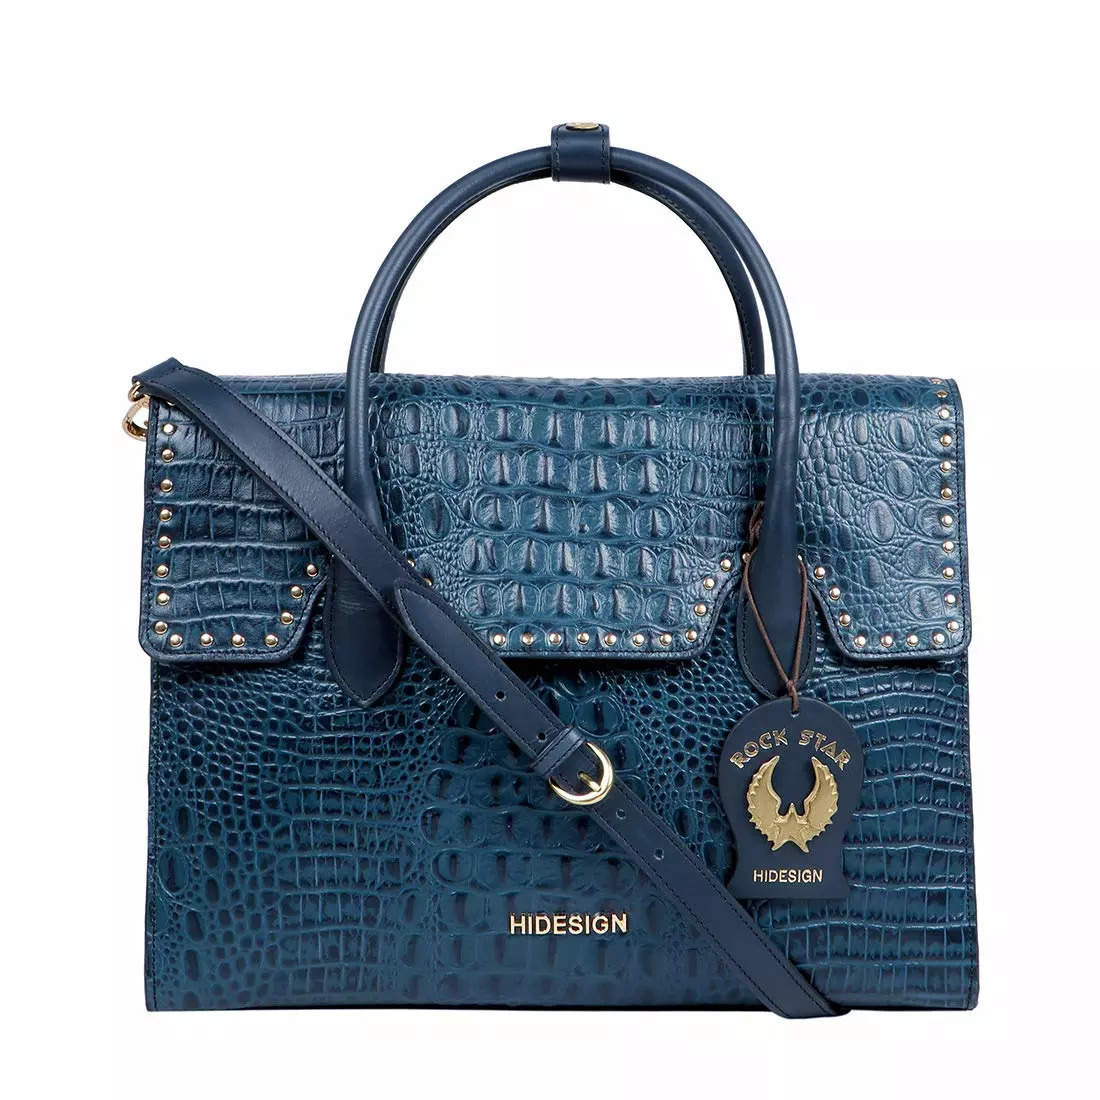 Ladies handbags: Premium Handbags For Women - The Economic Times